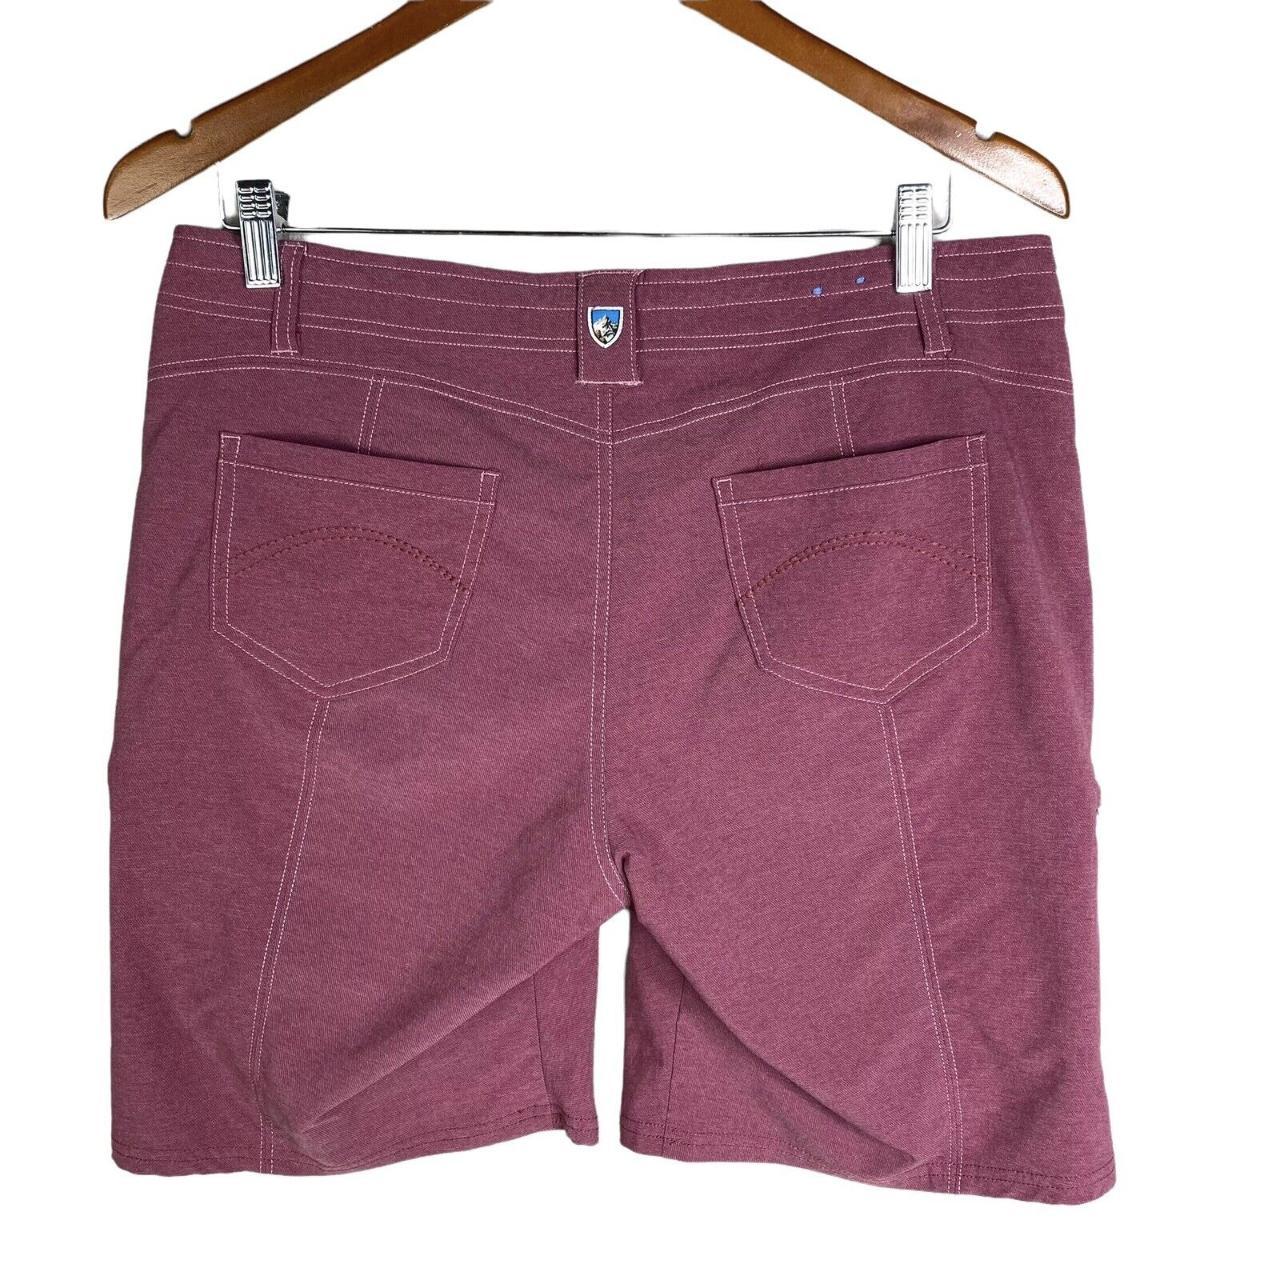 Product Image 2 - KUHL Women’s Red Shorts Free